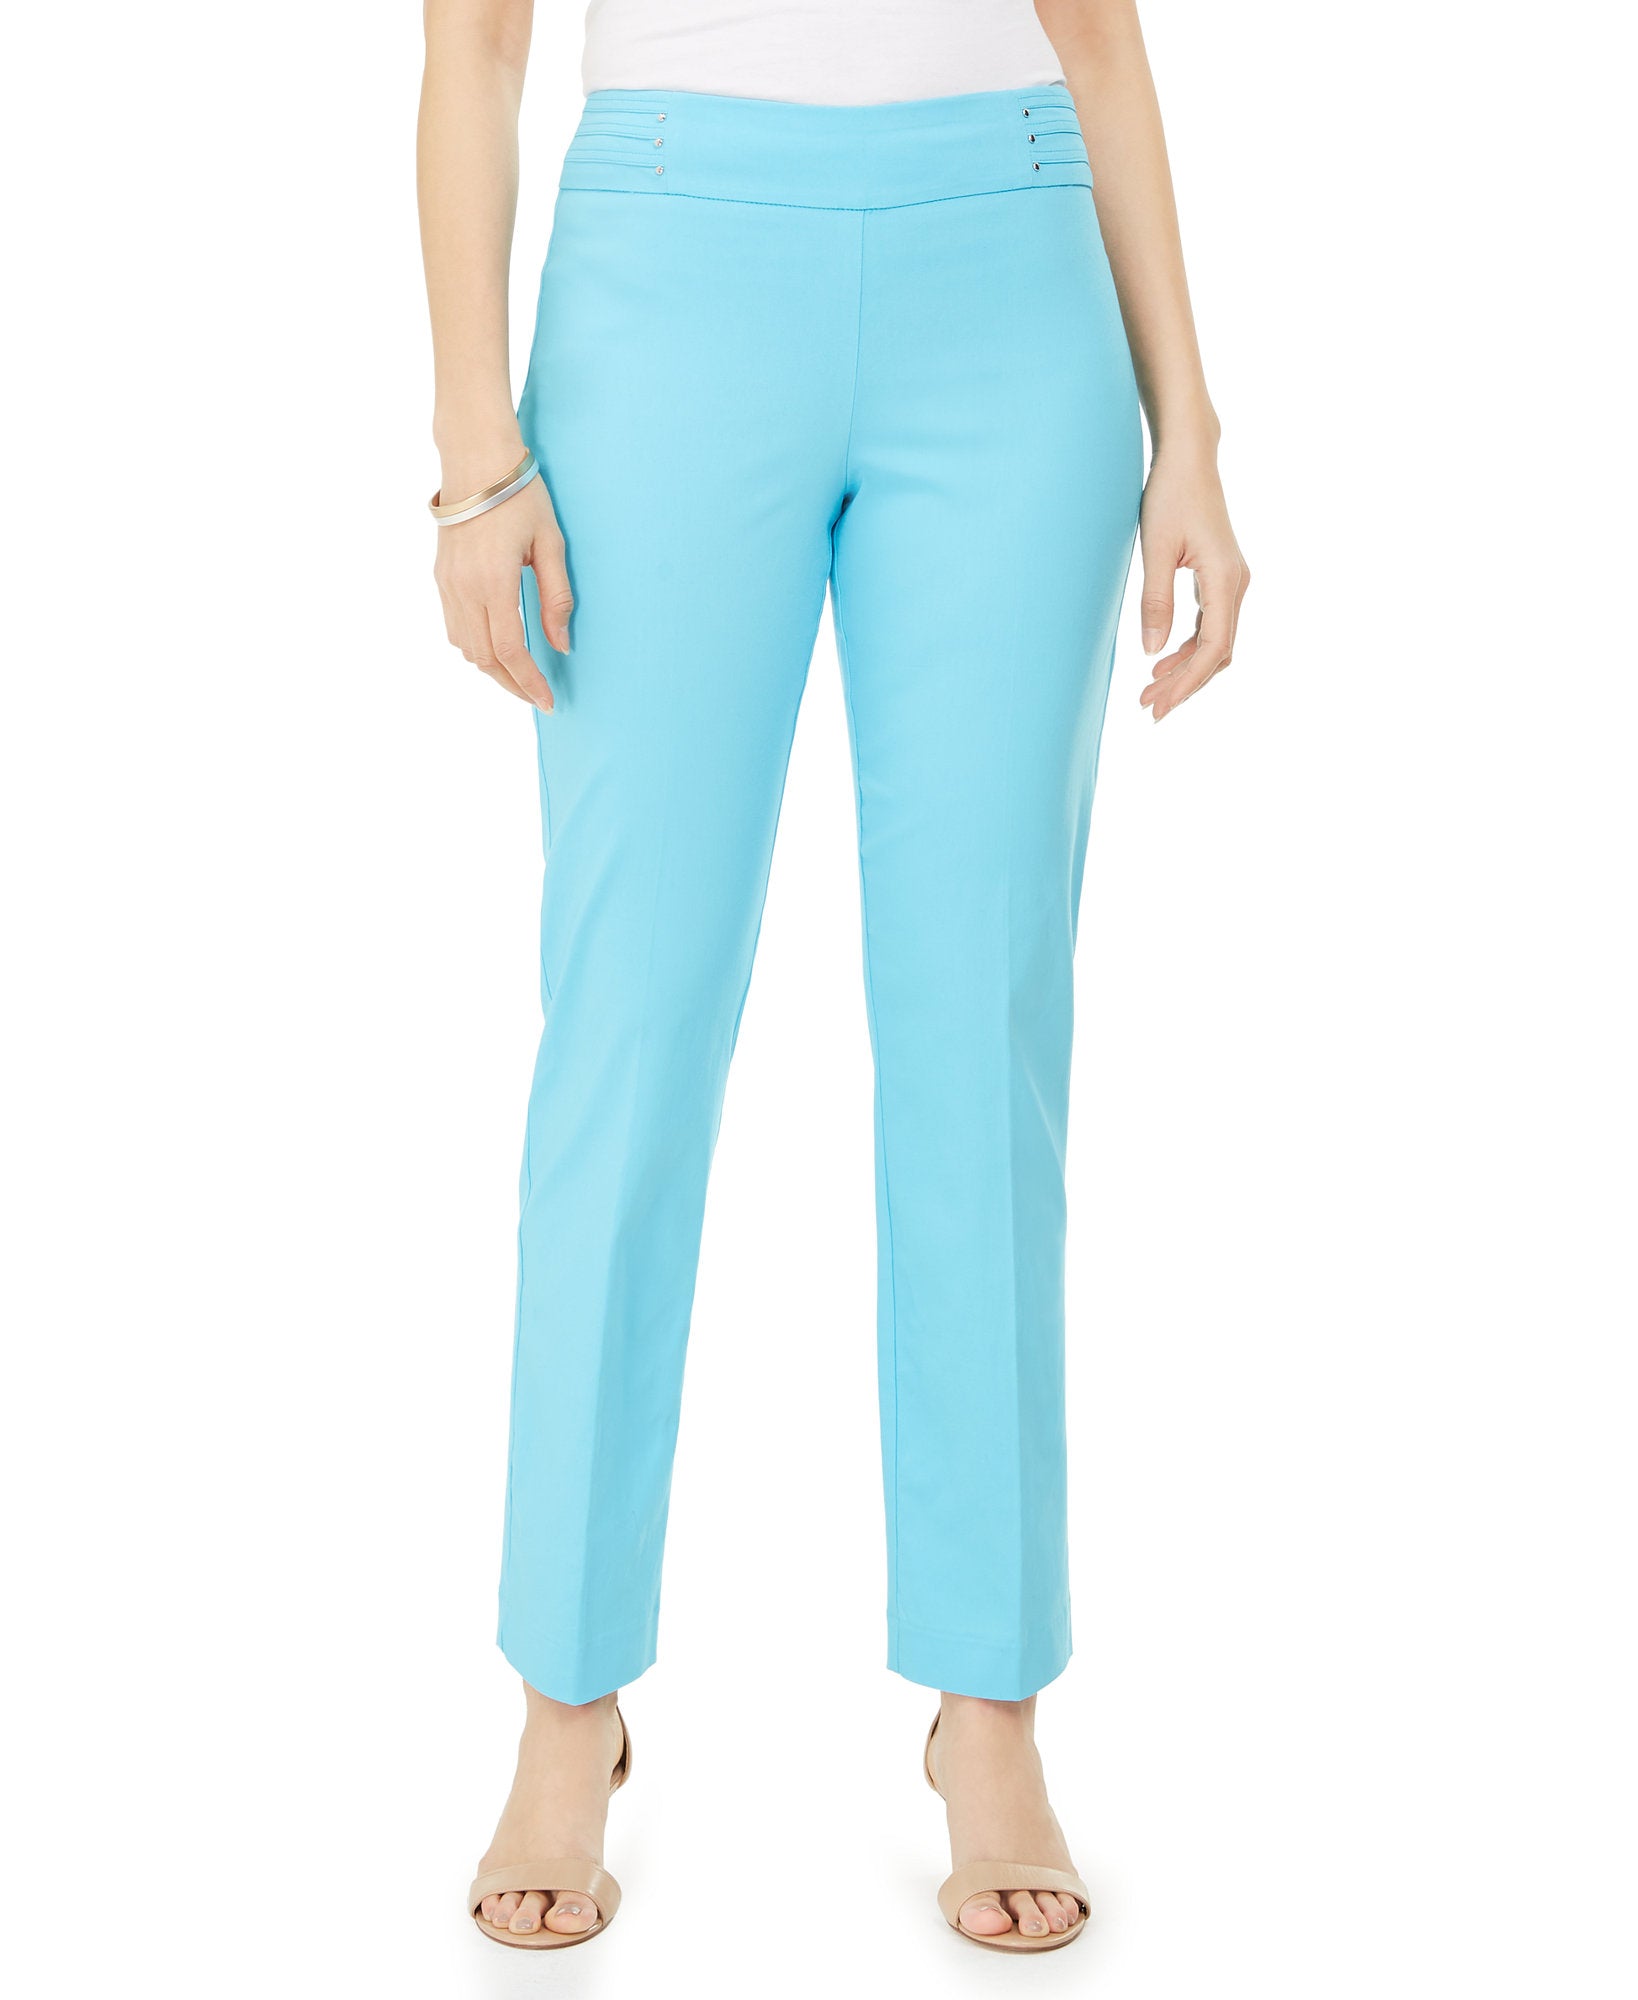 Petite Studded Pull-On Pants – Online Warehouse Sale